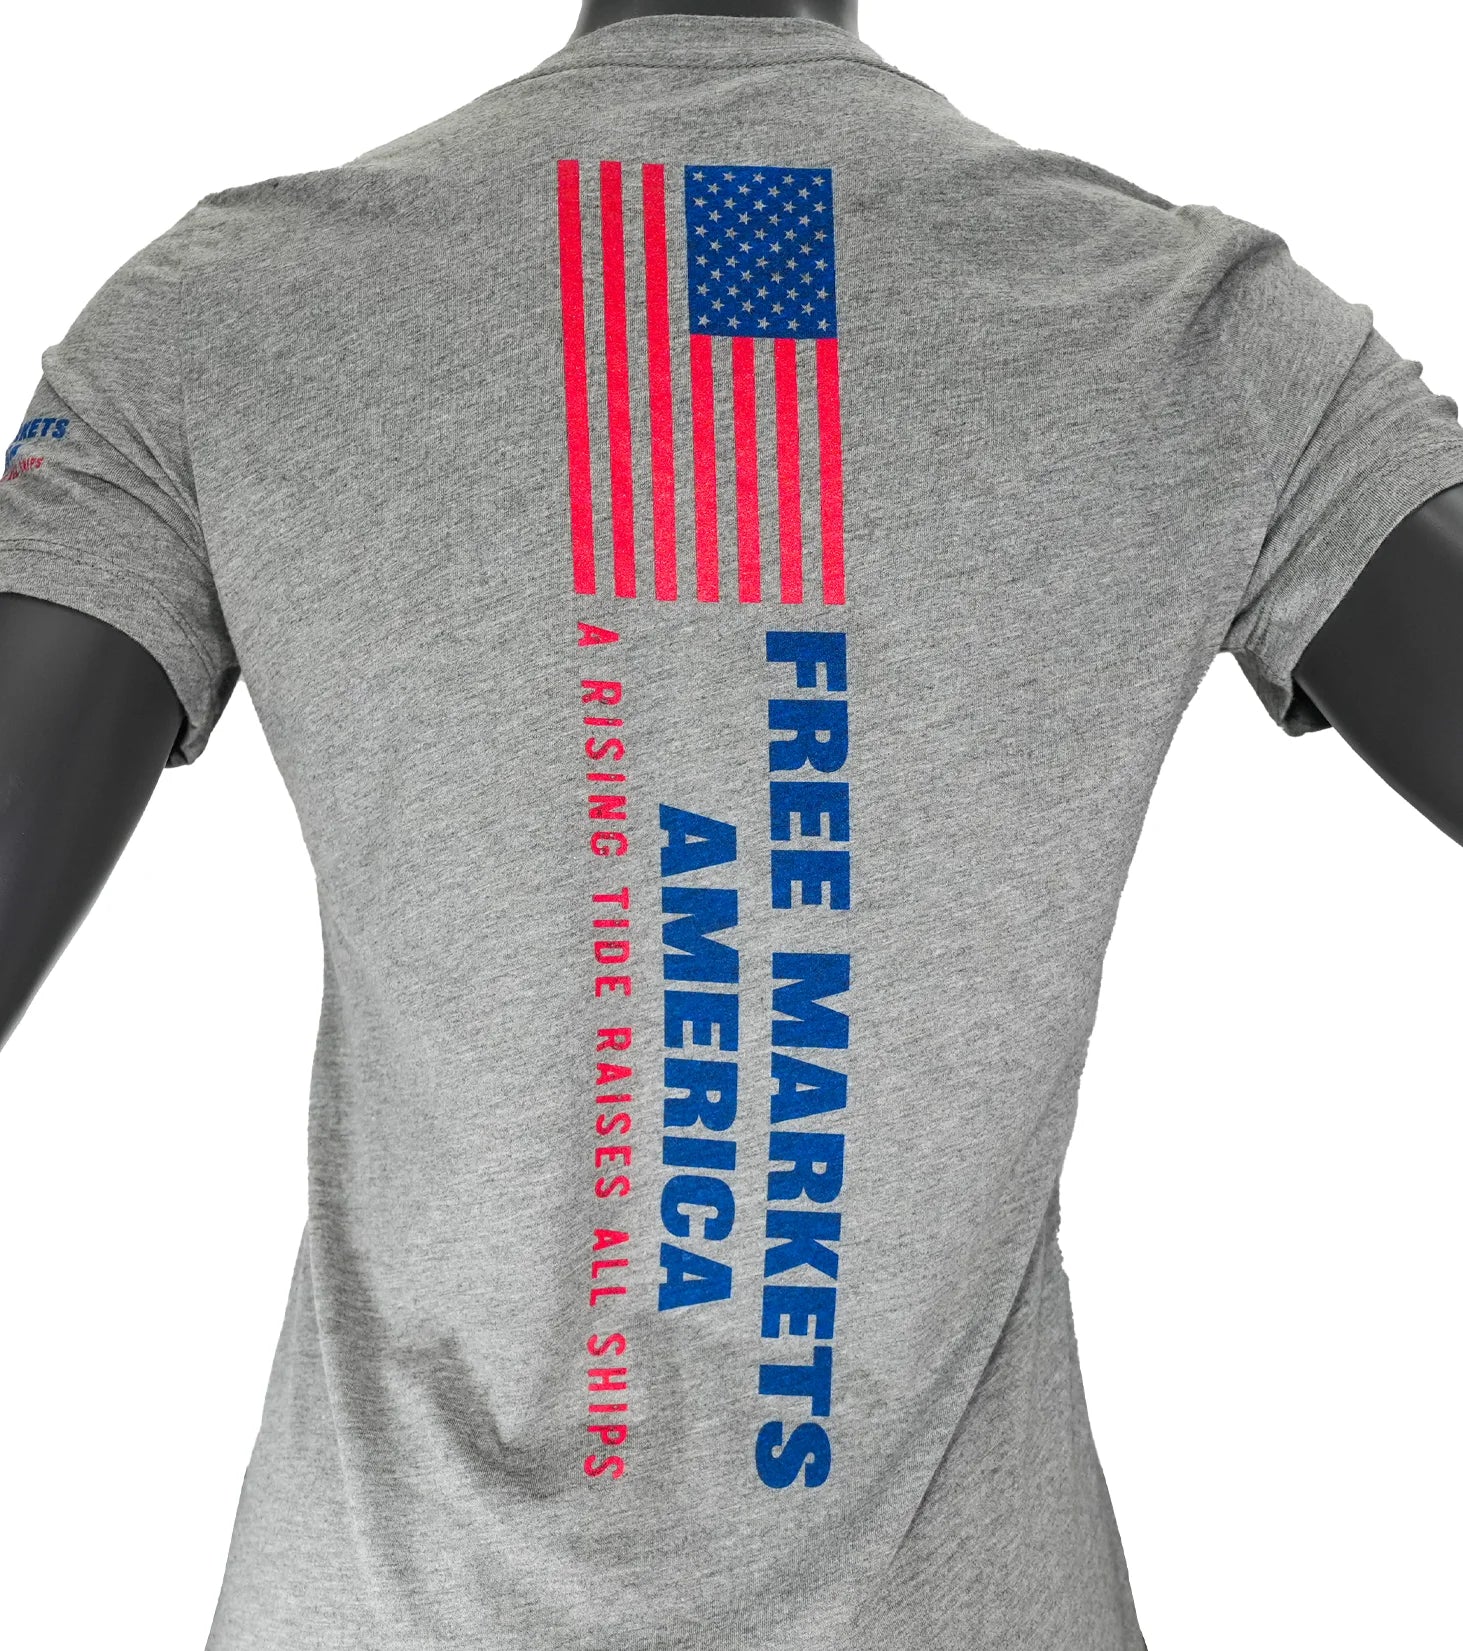 Free Markets America T-Shirt